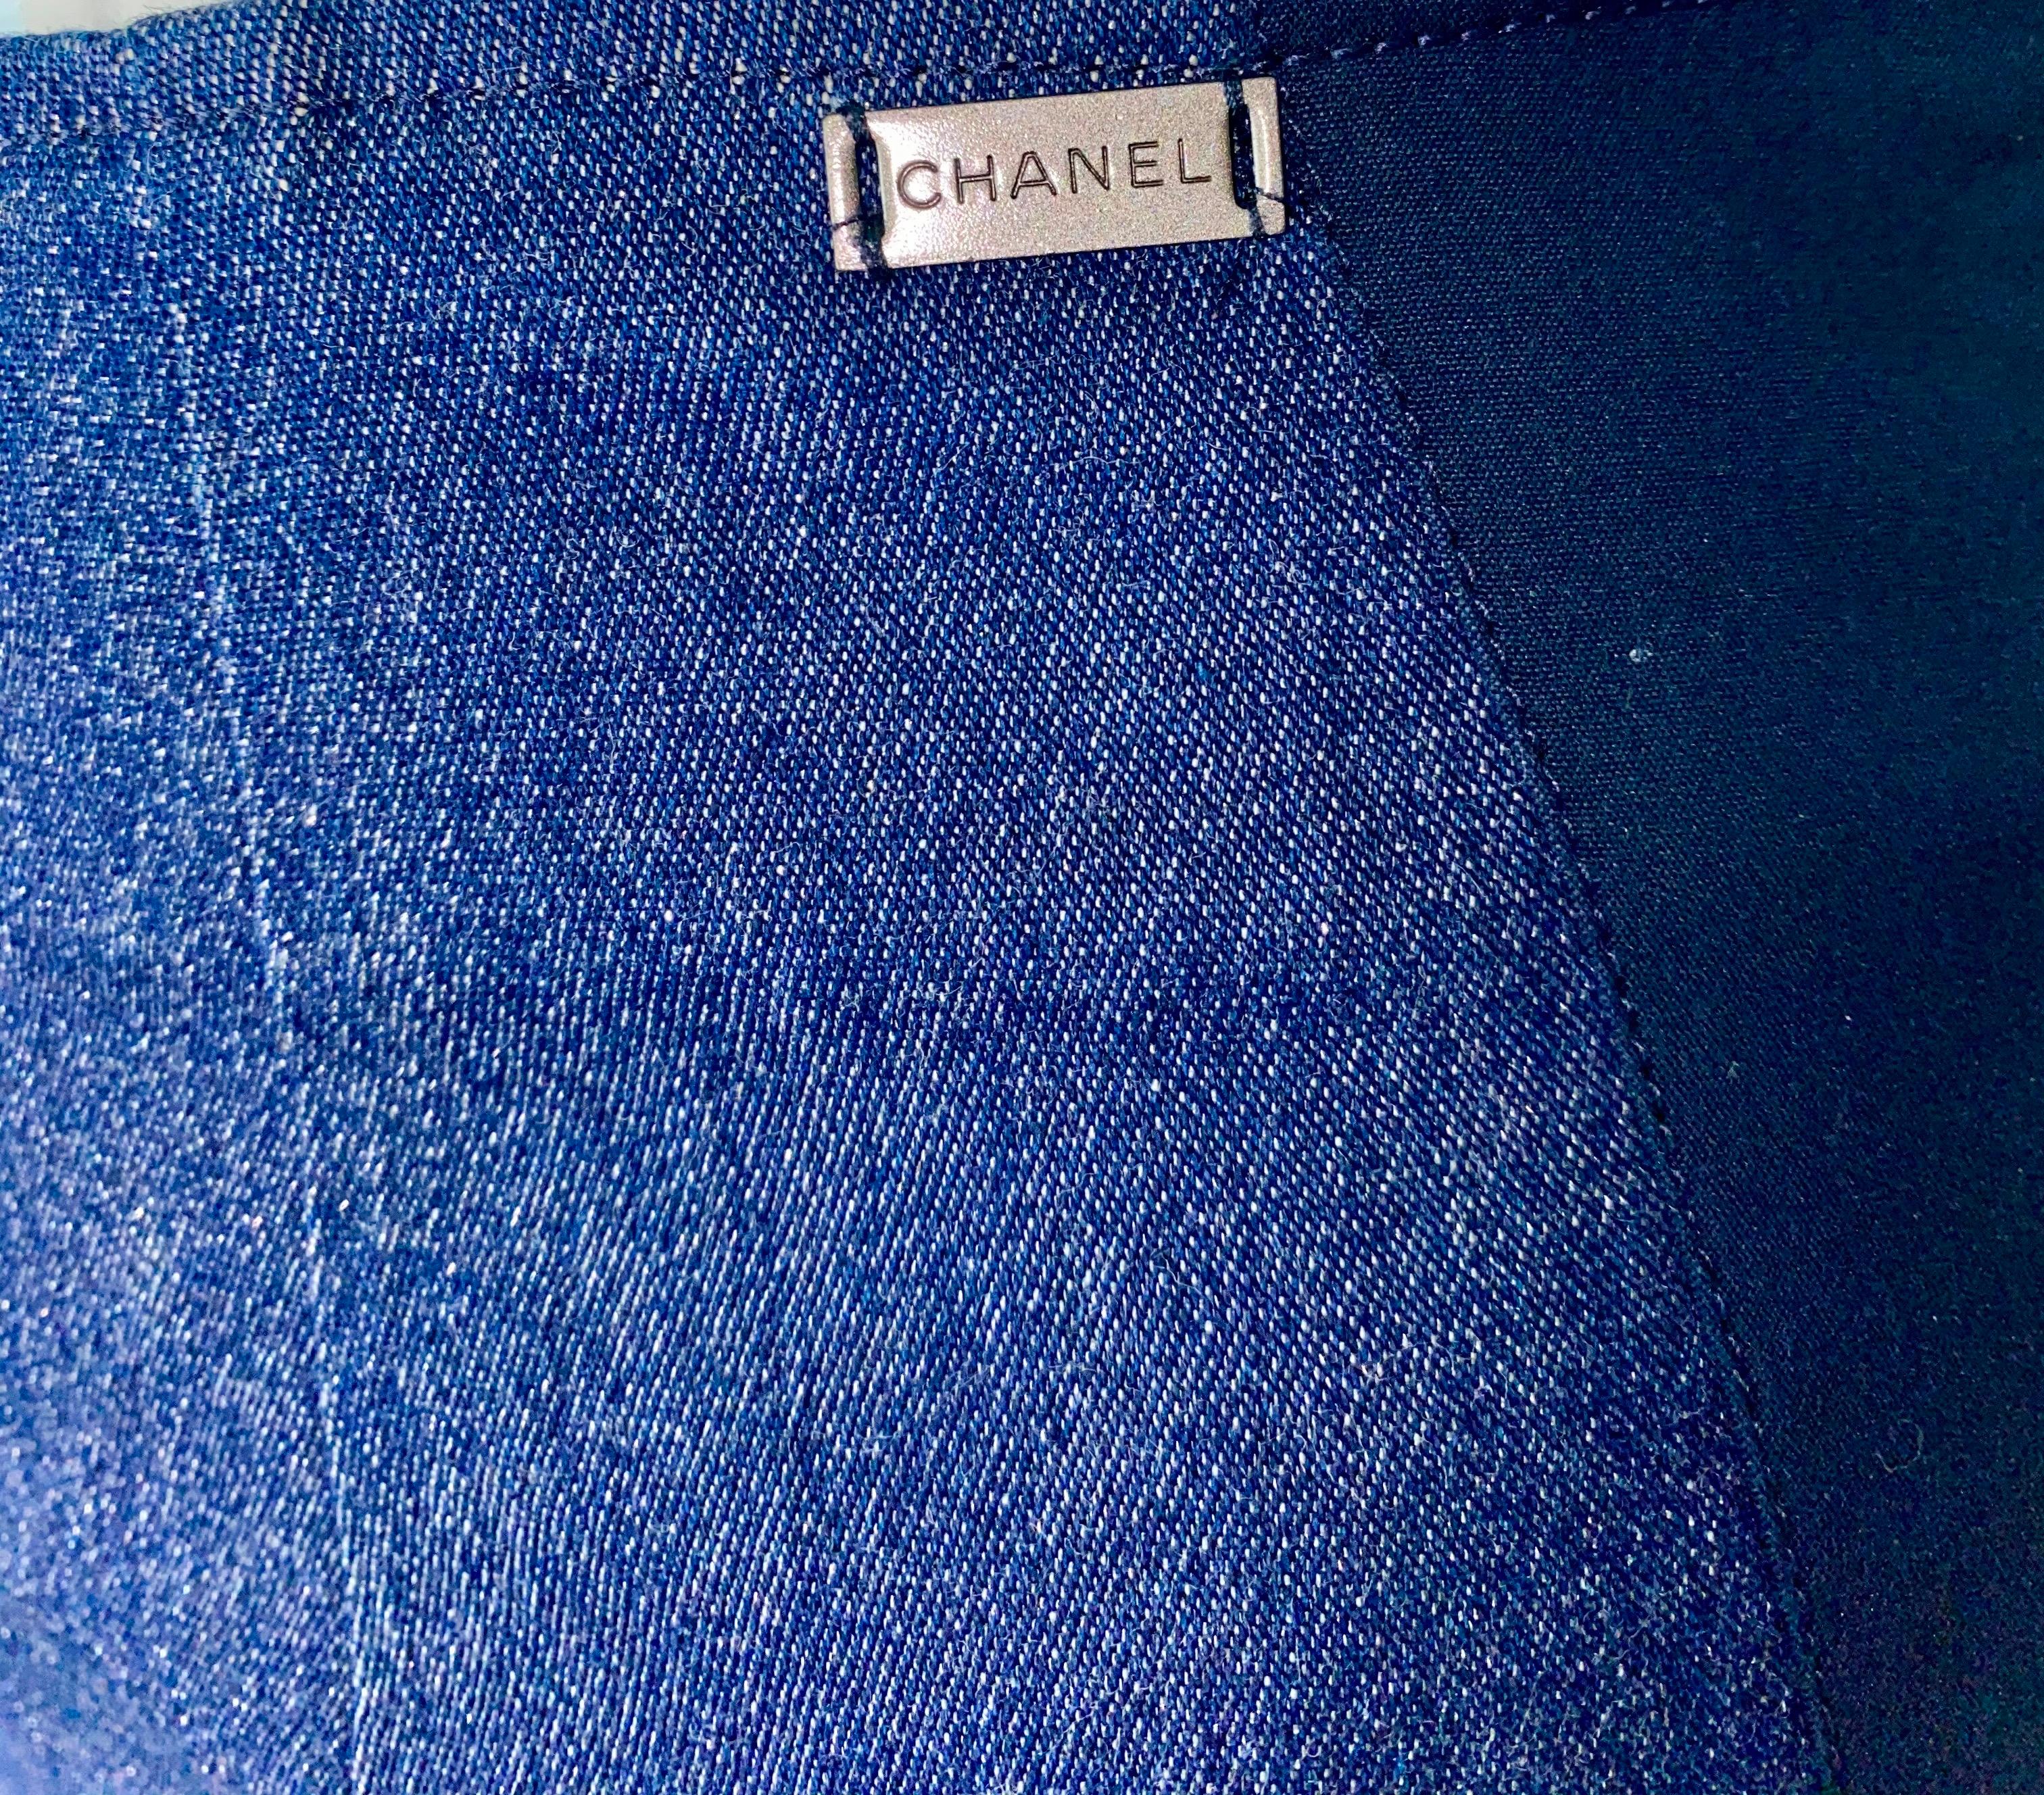 Gorgeous CHANEL Sparkling Denim Jeans Tuxedo Style Skirt 34 For Sale 1